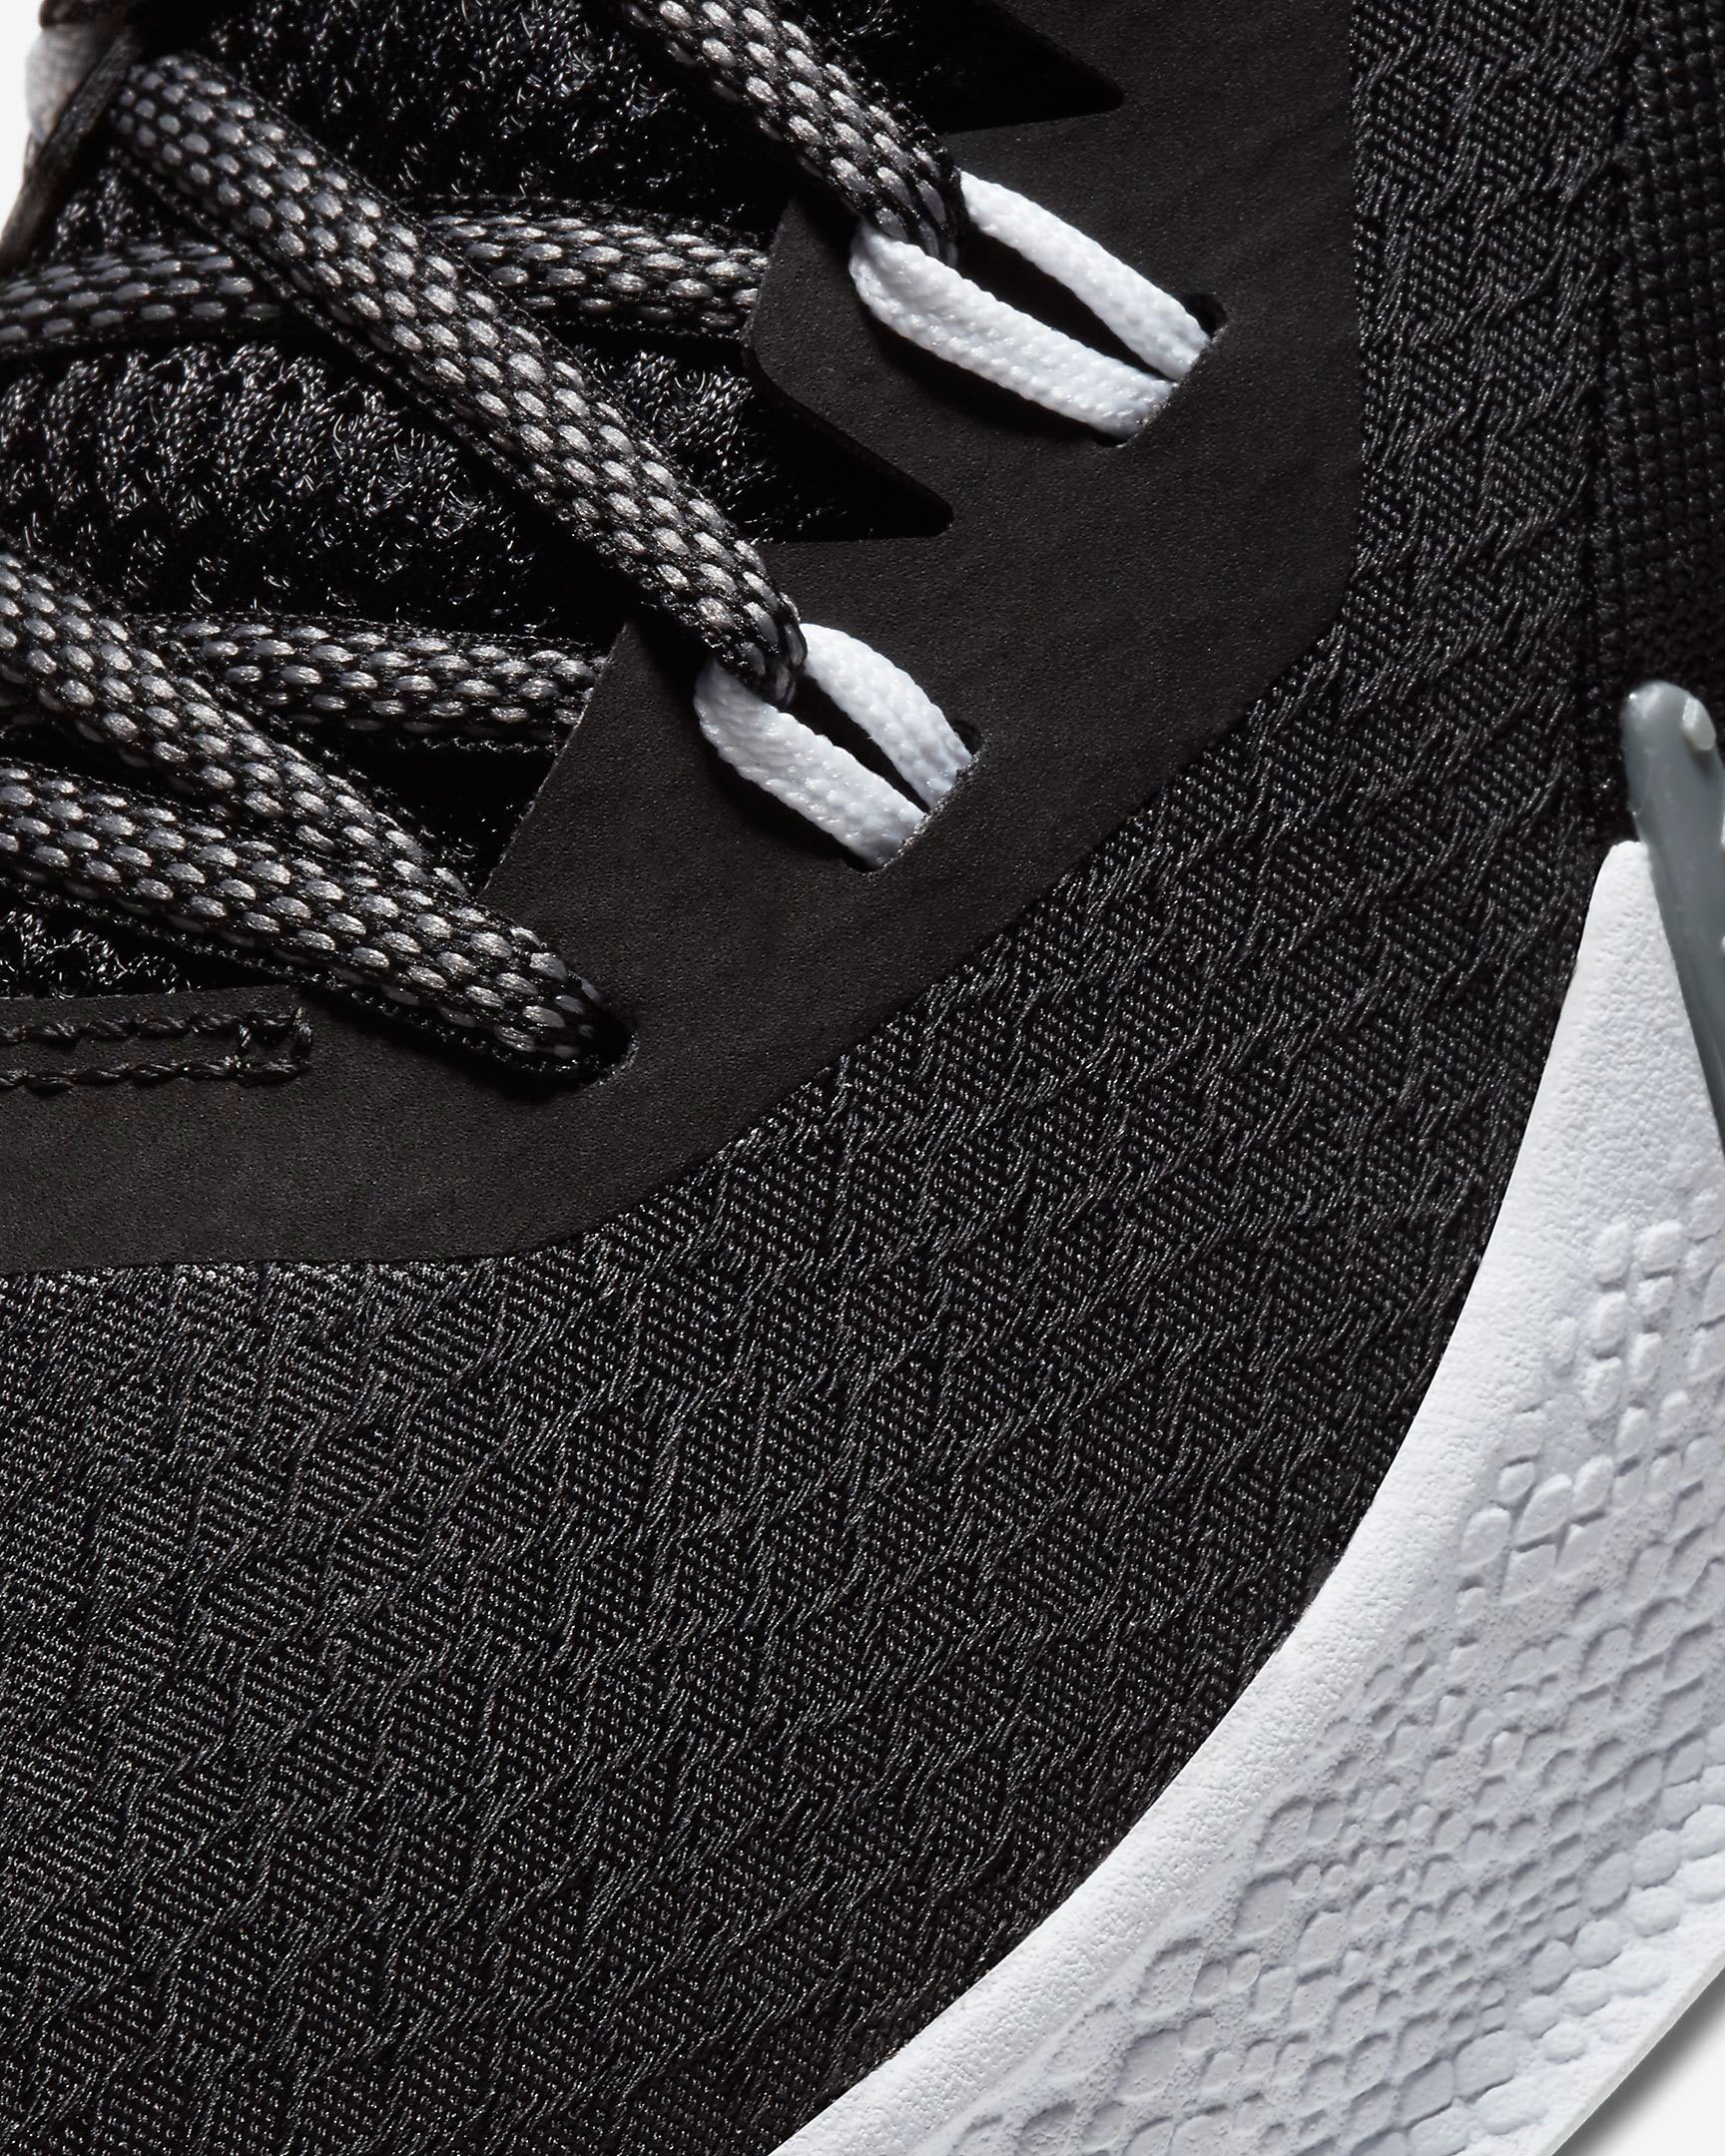 Nike Kobe Mamba Fury Black Grey Clothing Match | SneakerFits.com